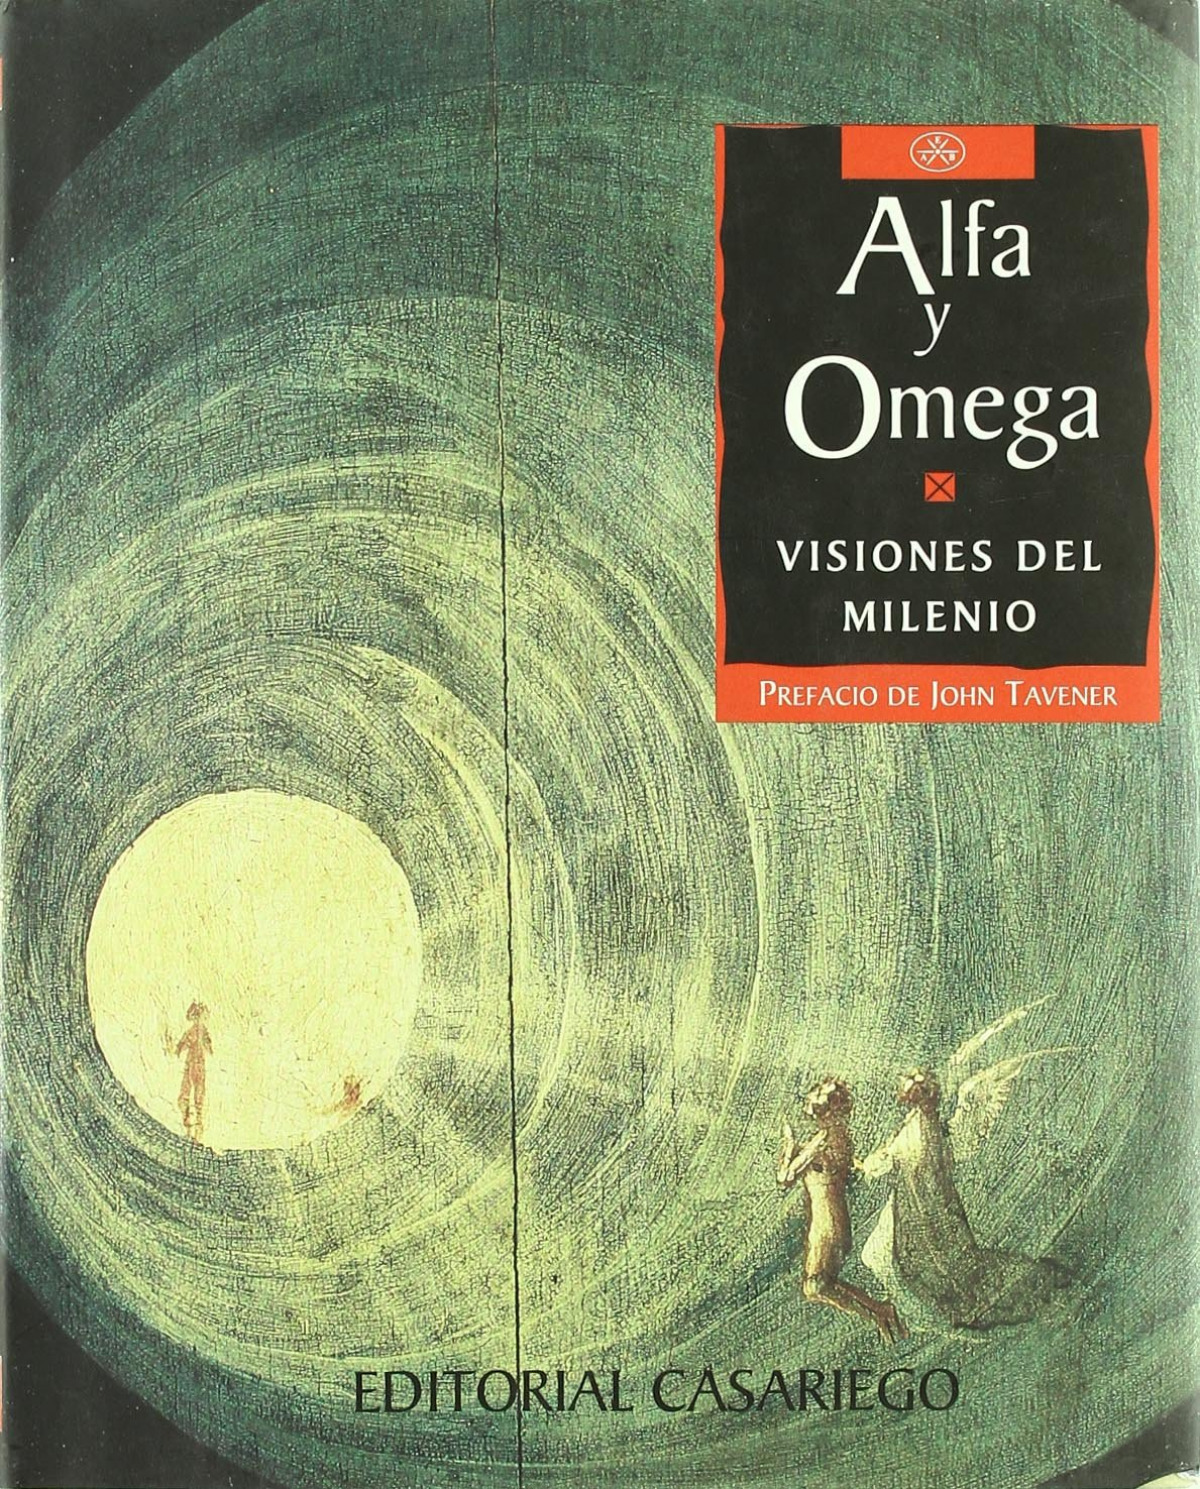 Alfa y omega, visiones del milenio - John Tavener